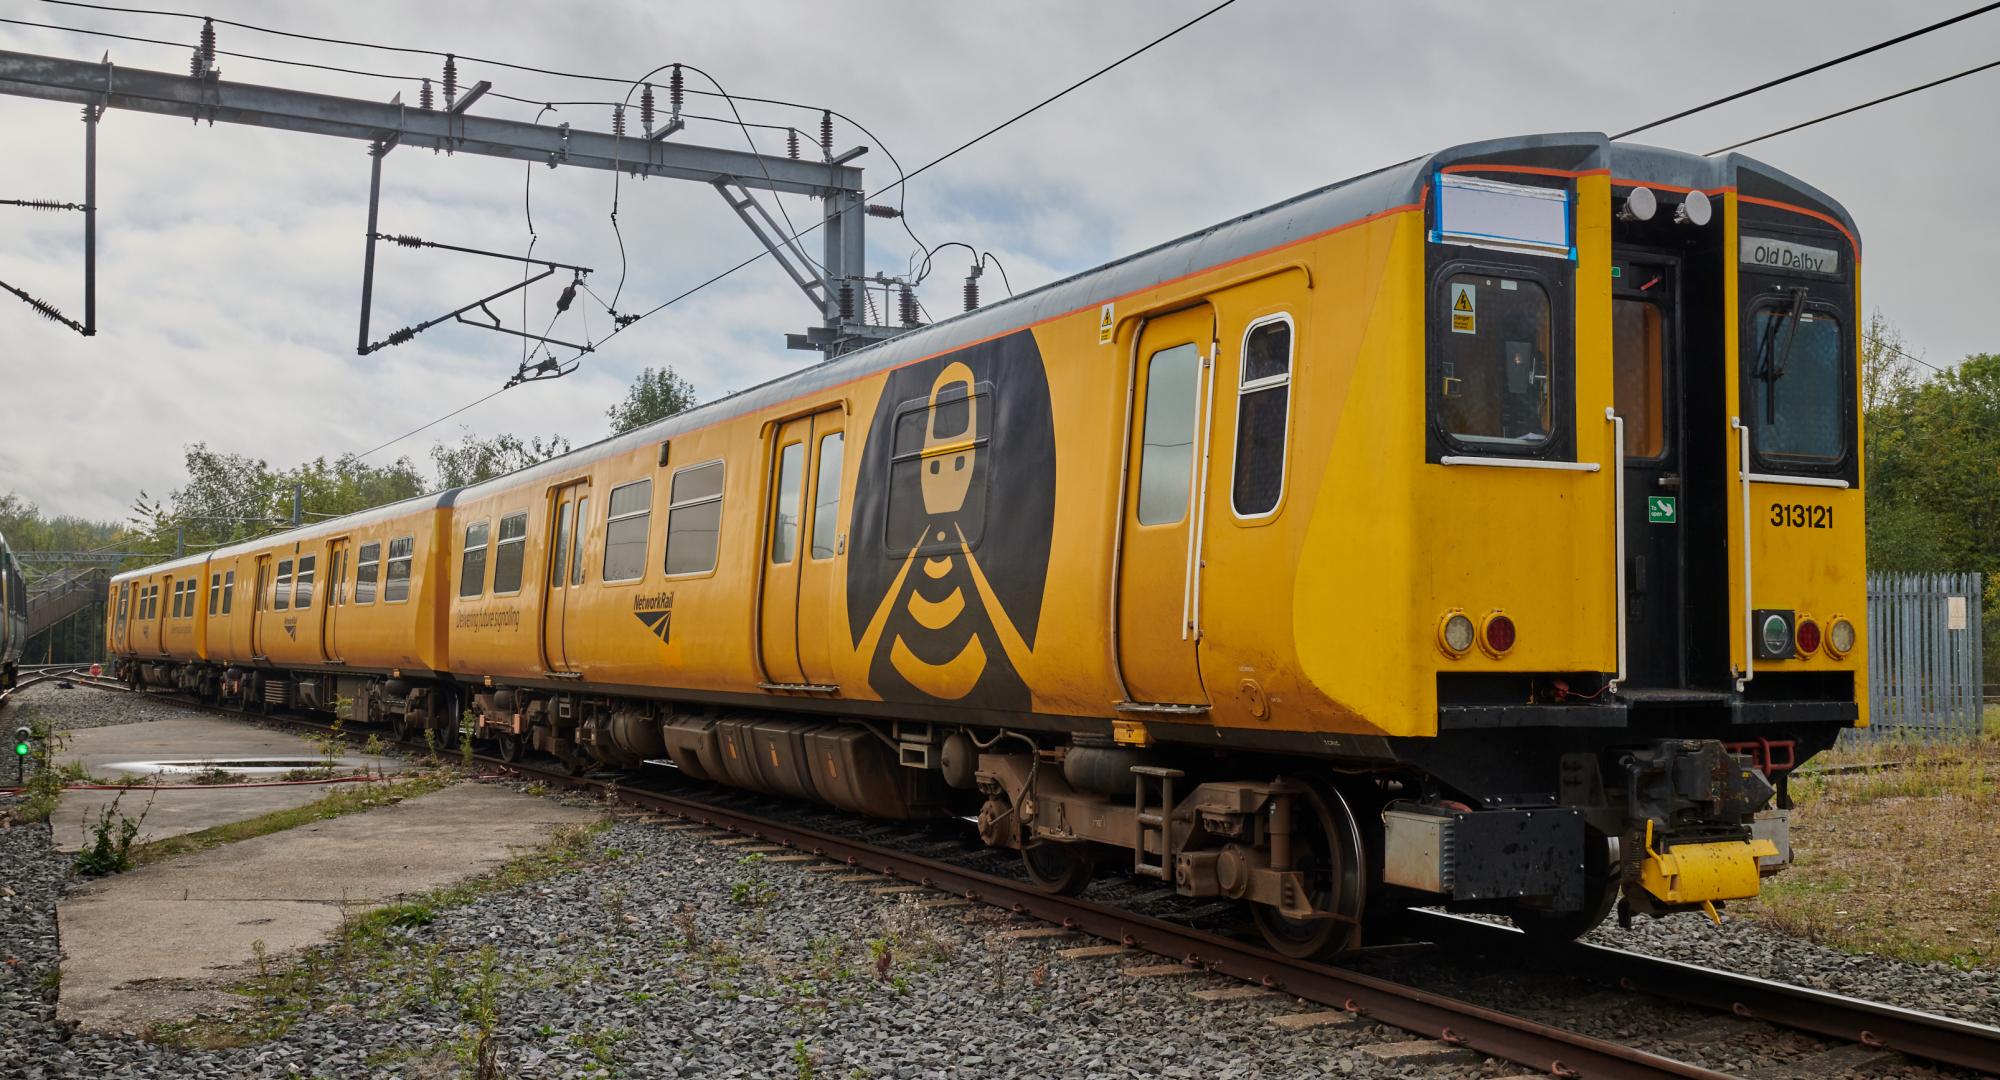 Network Rail class 313 test train